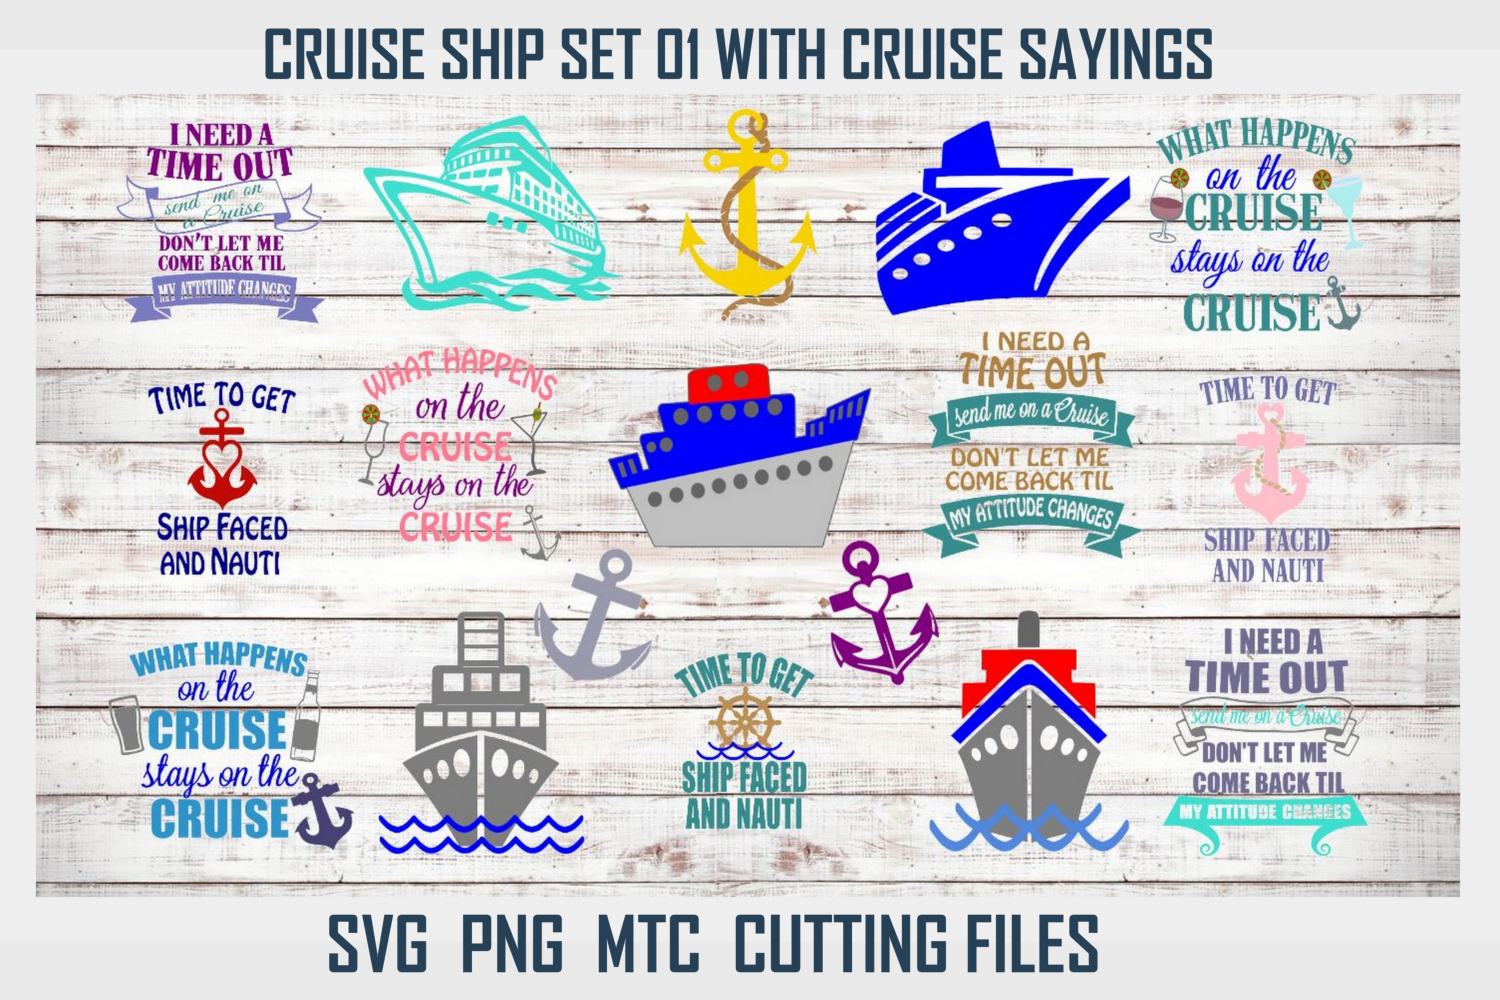 Cruise Ship Set 01 Cruise Sayings Bundle SVG Cut File